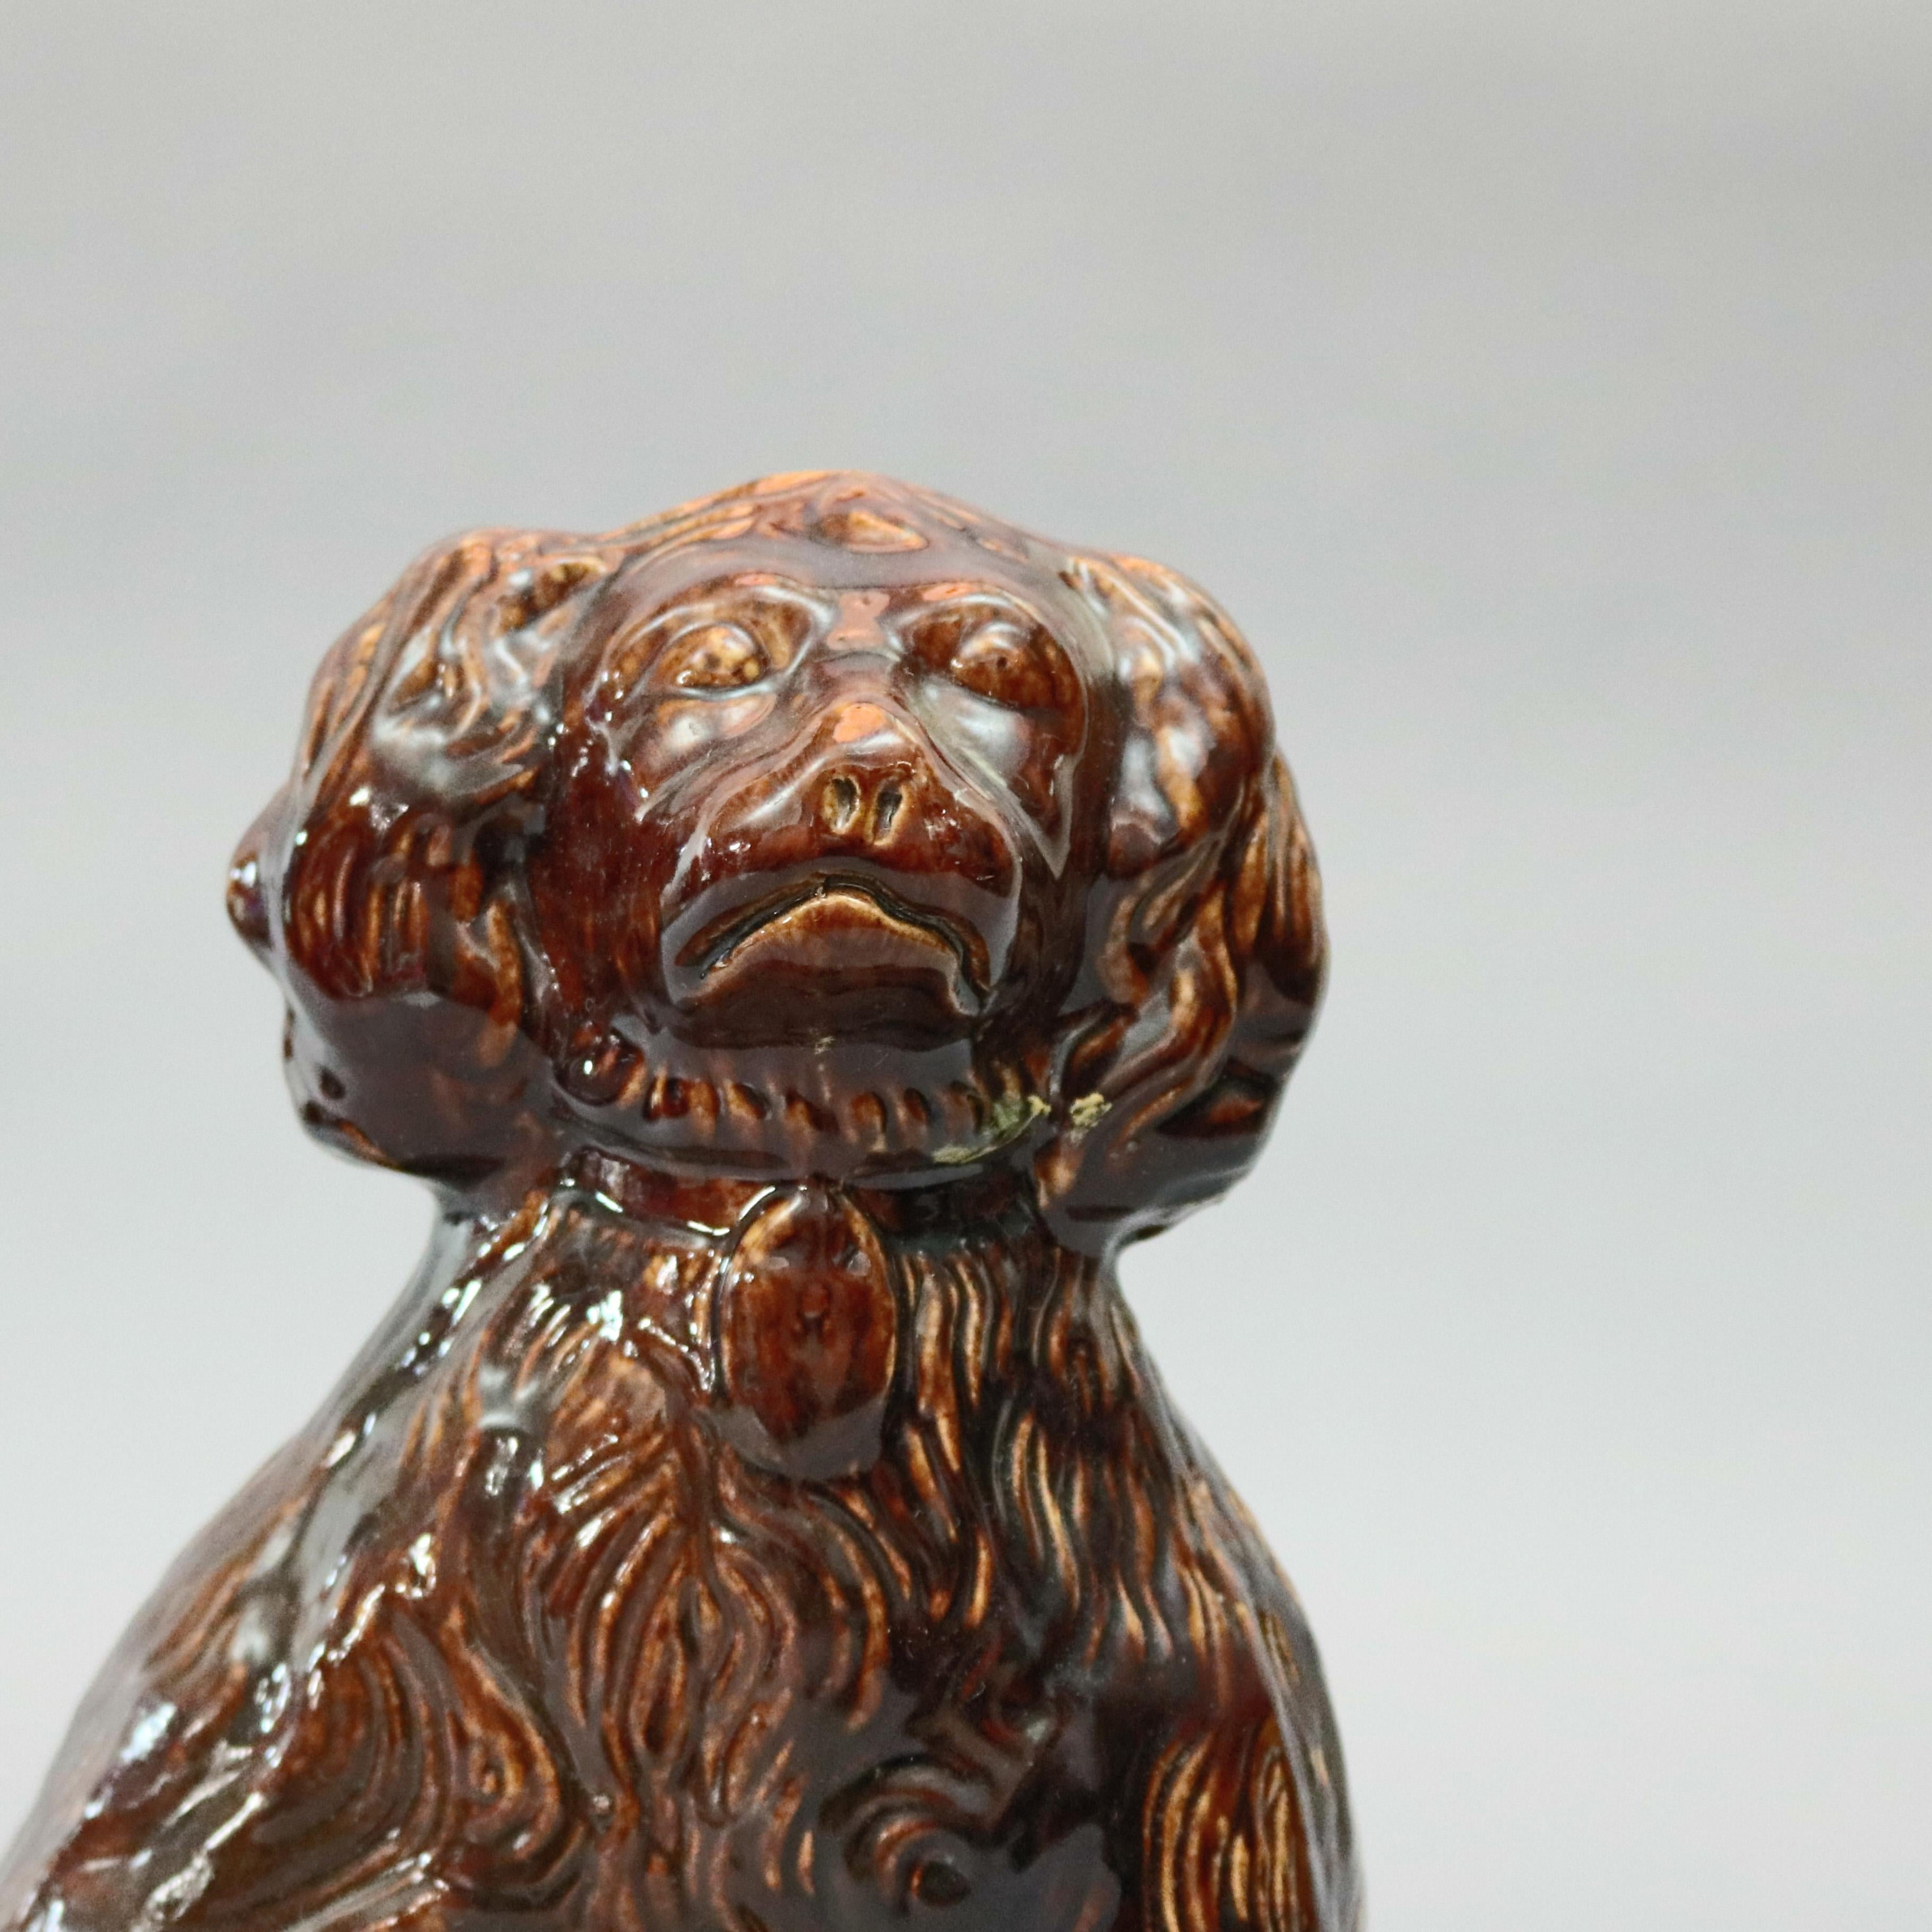 An antique Bennington Pottery School figural dog offers spaniel form in Rockingham glaze, circa 1849

Measures: 12.25